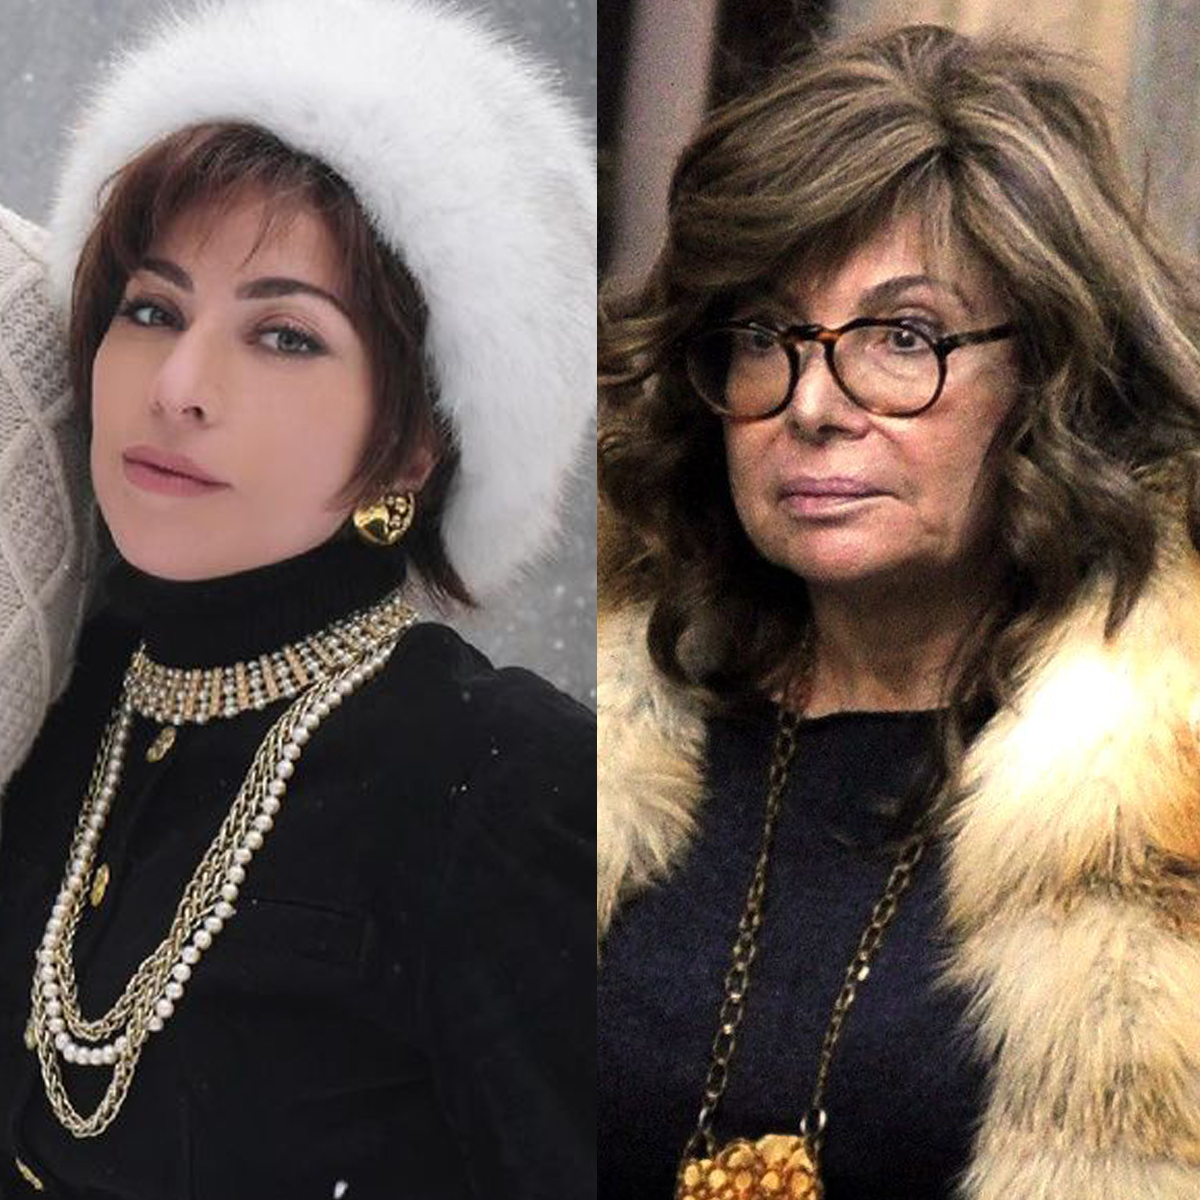 Gucci's Ex Patrizia Reggiani Slams Lady Gaga & House of Gucci